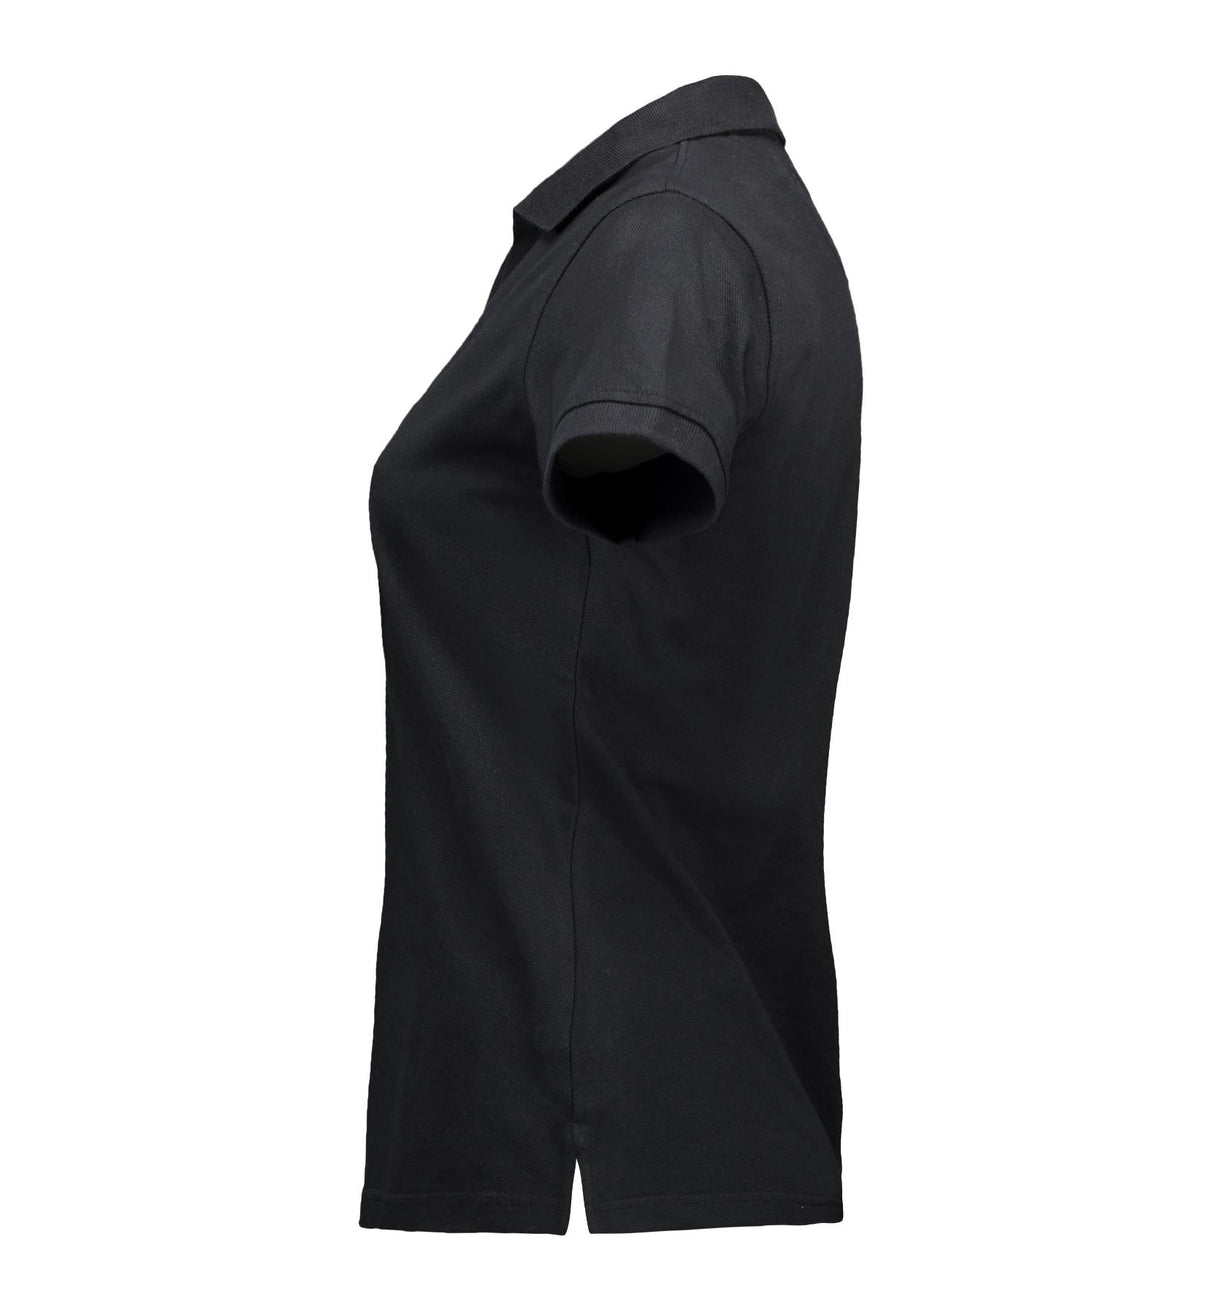 ID Identity 0561 Game Short Sleeve Black Ladies Polo Shirt, Size - M